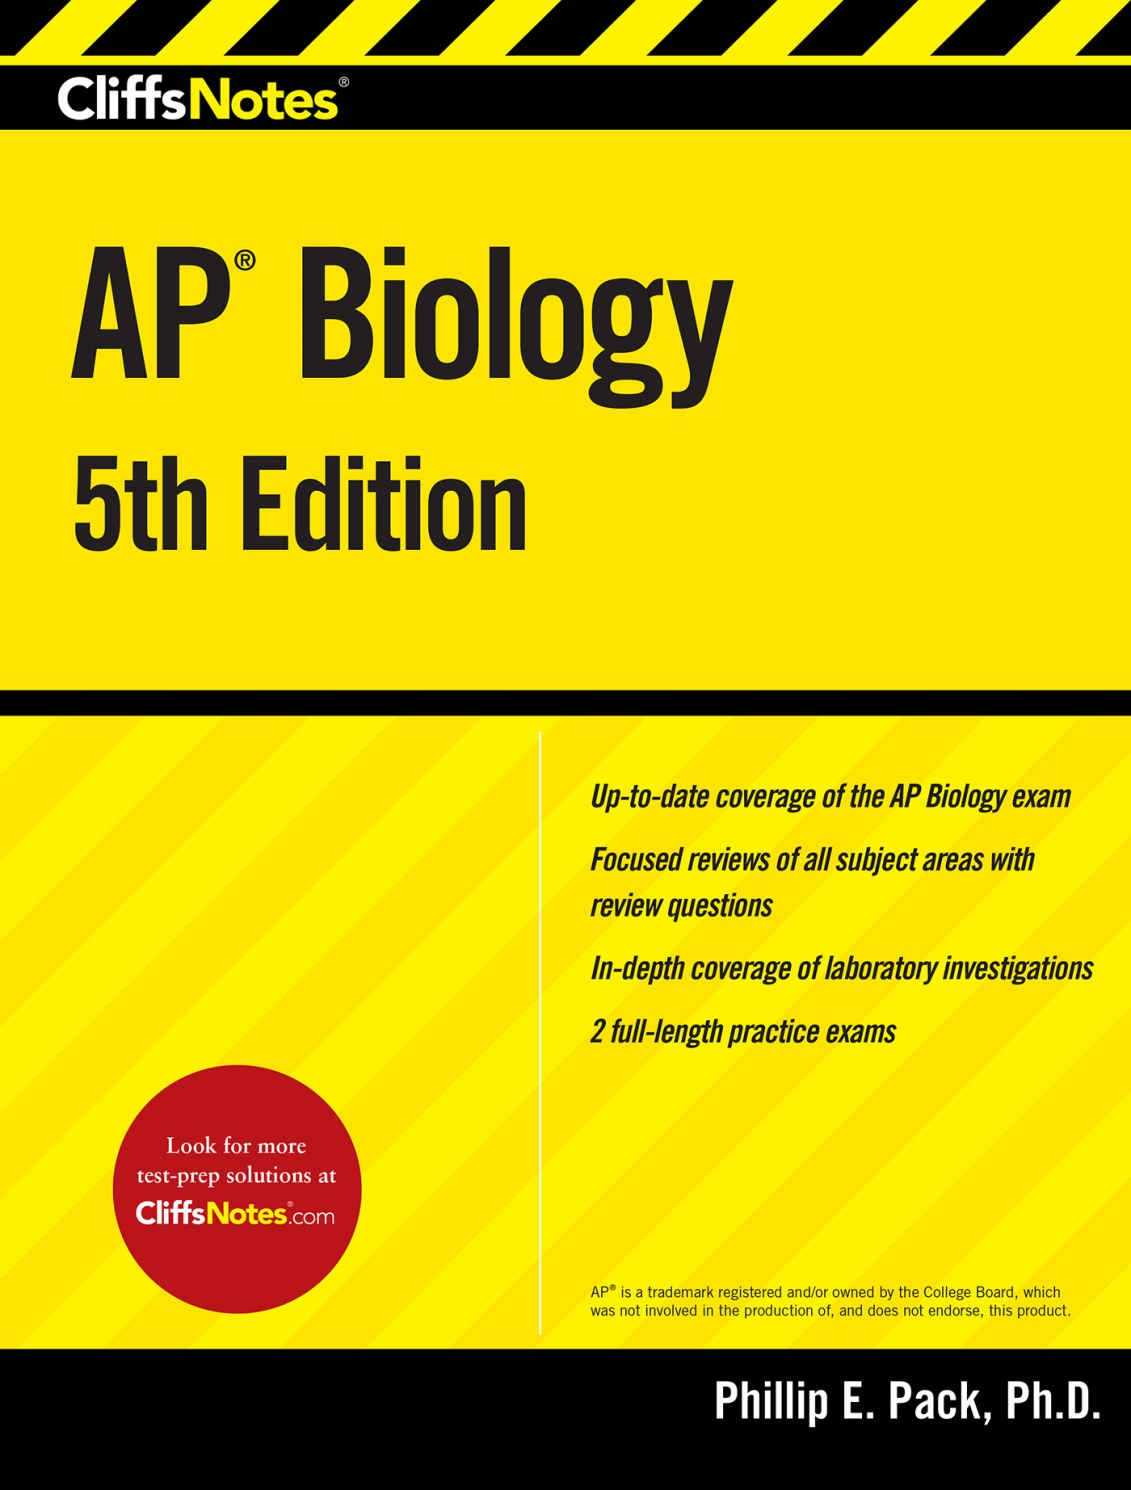 Overview of AP Biology Practice Exam